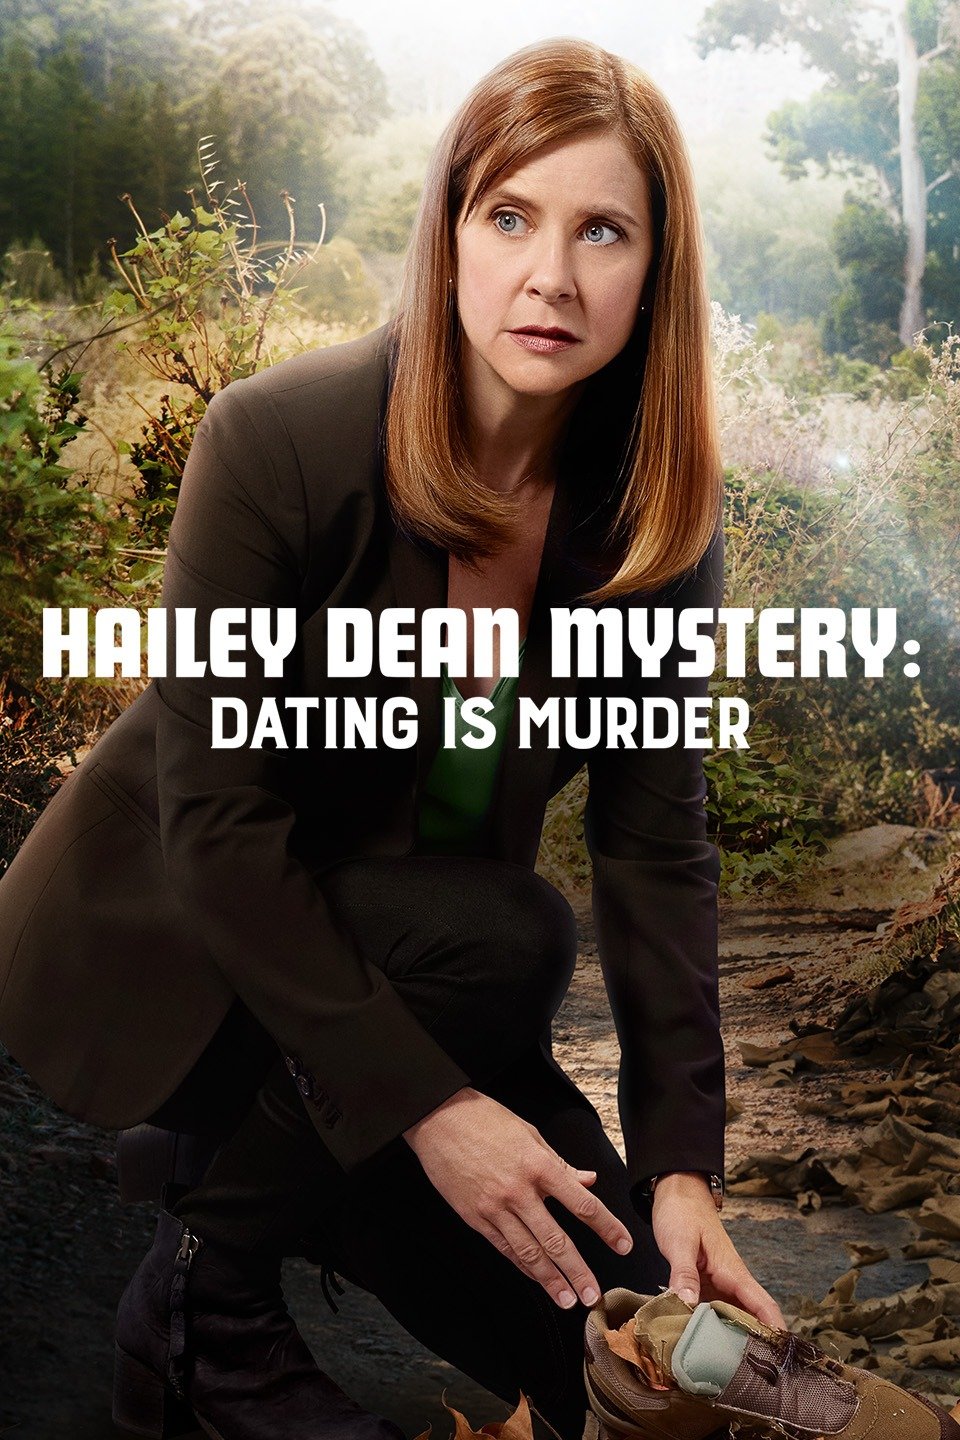 Hailey dean mystery: dating is murder